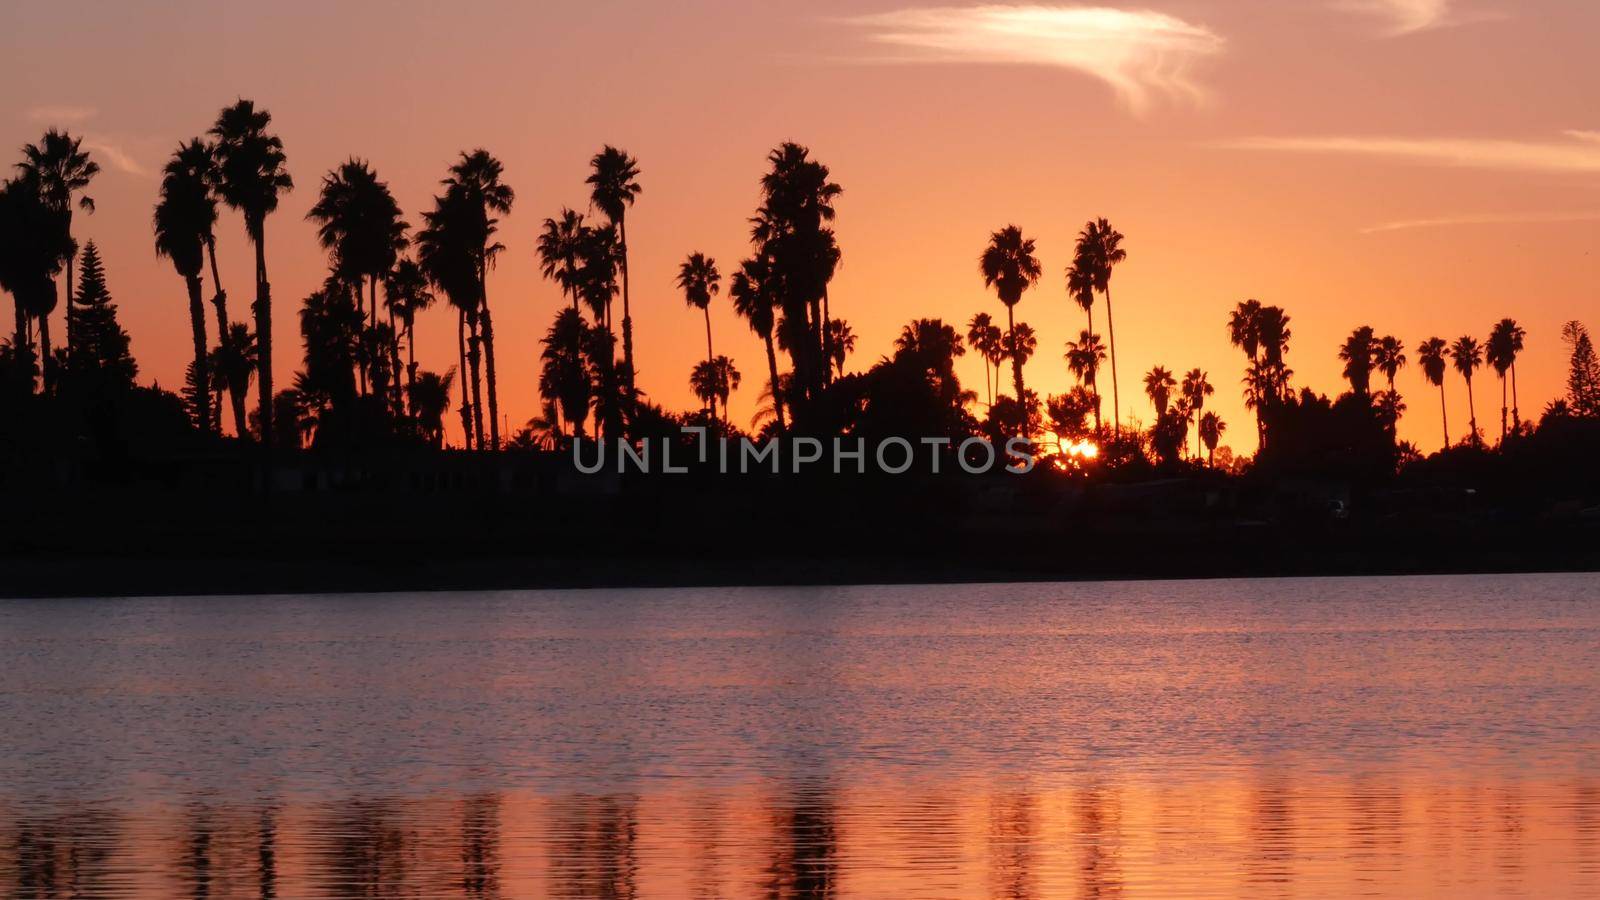 Many palm trees silhouettes reflection, sunset ocean beach, California coast USA by DogoraSun